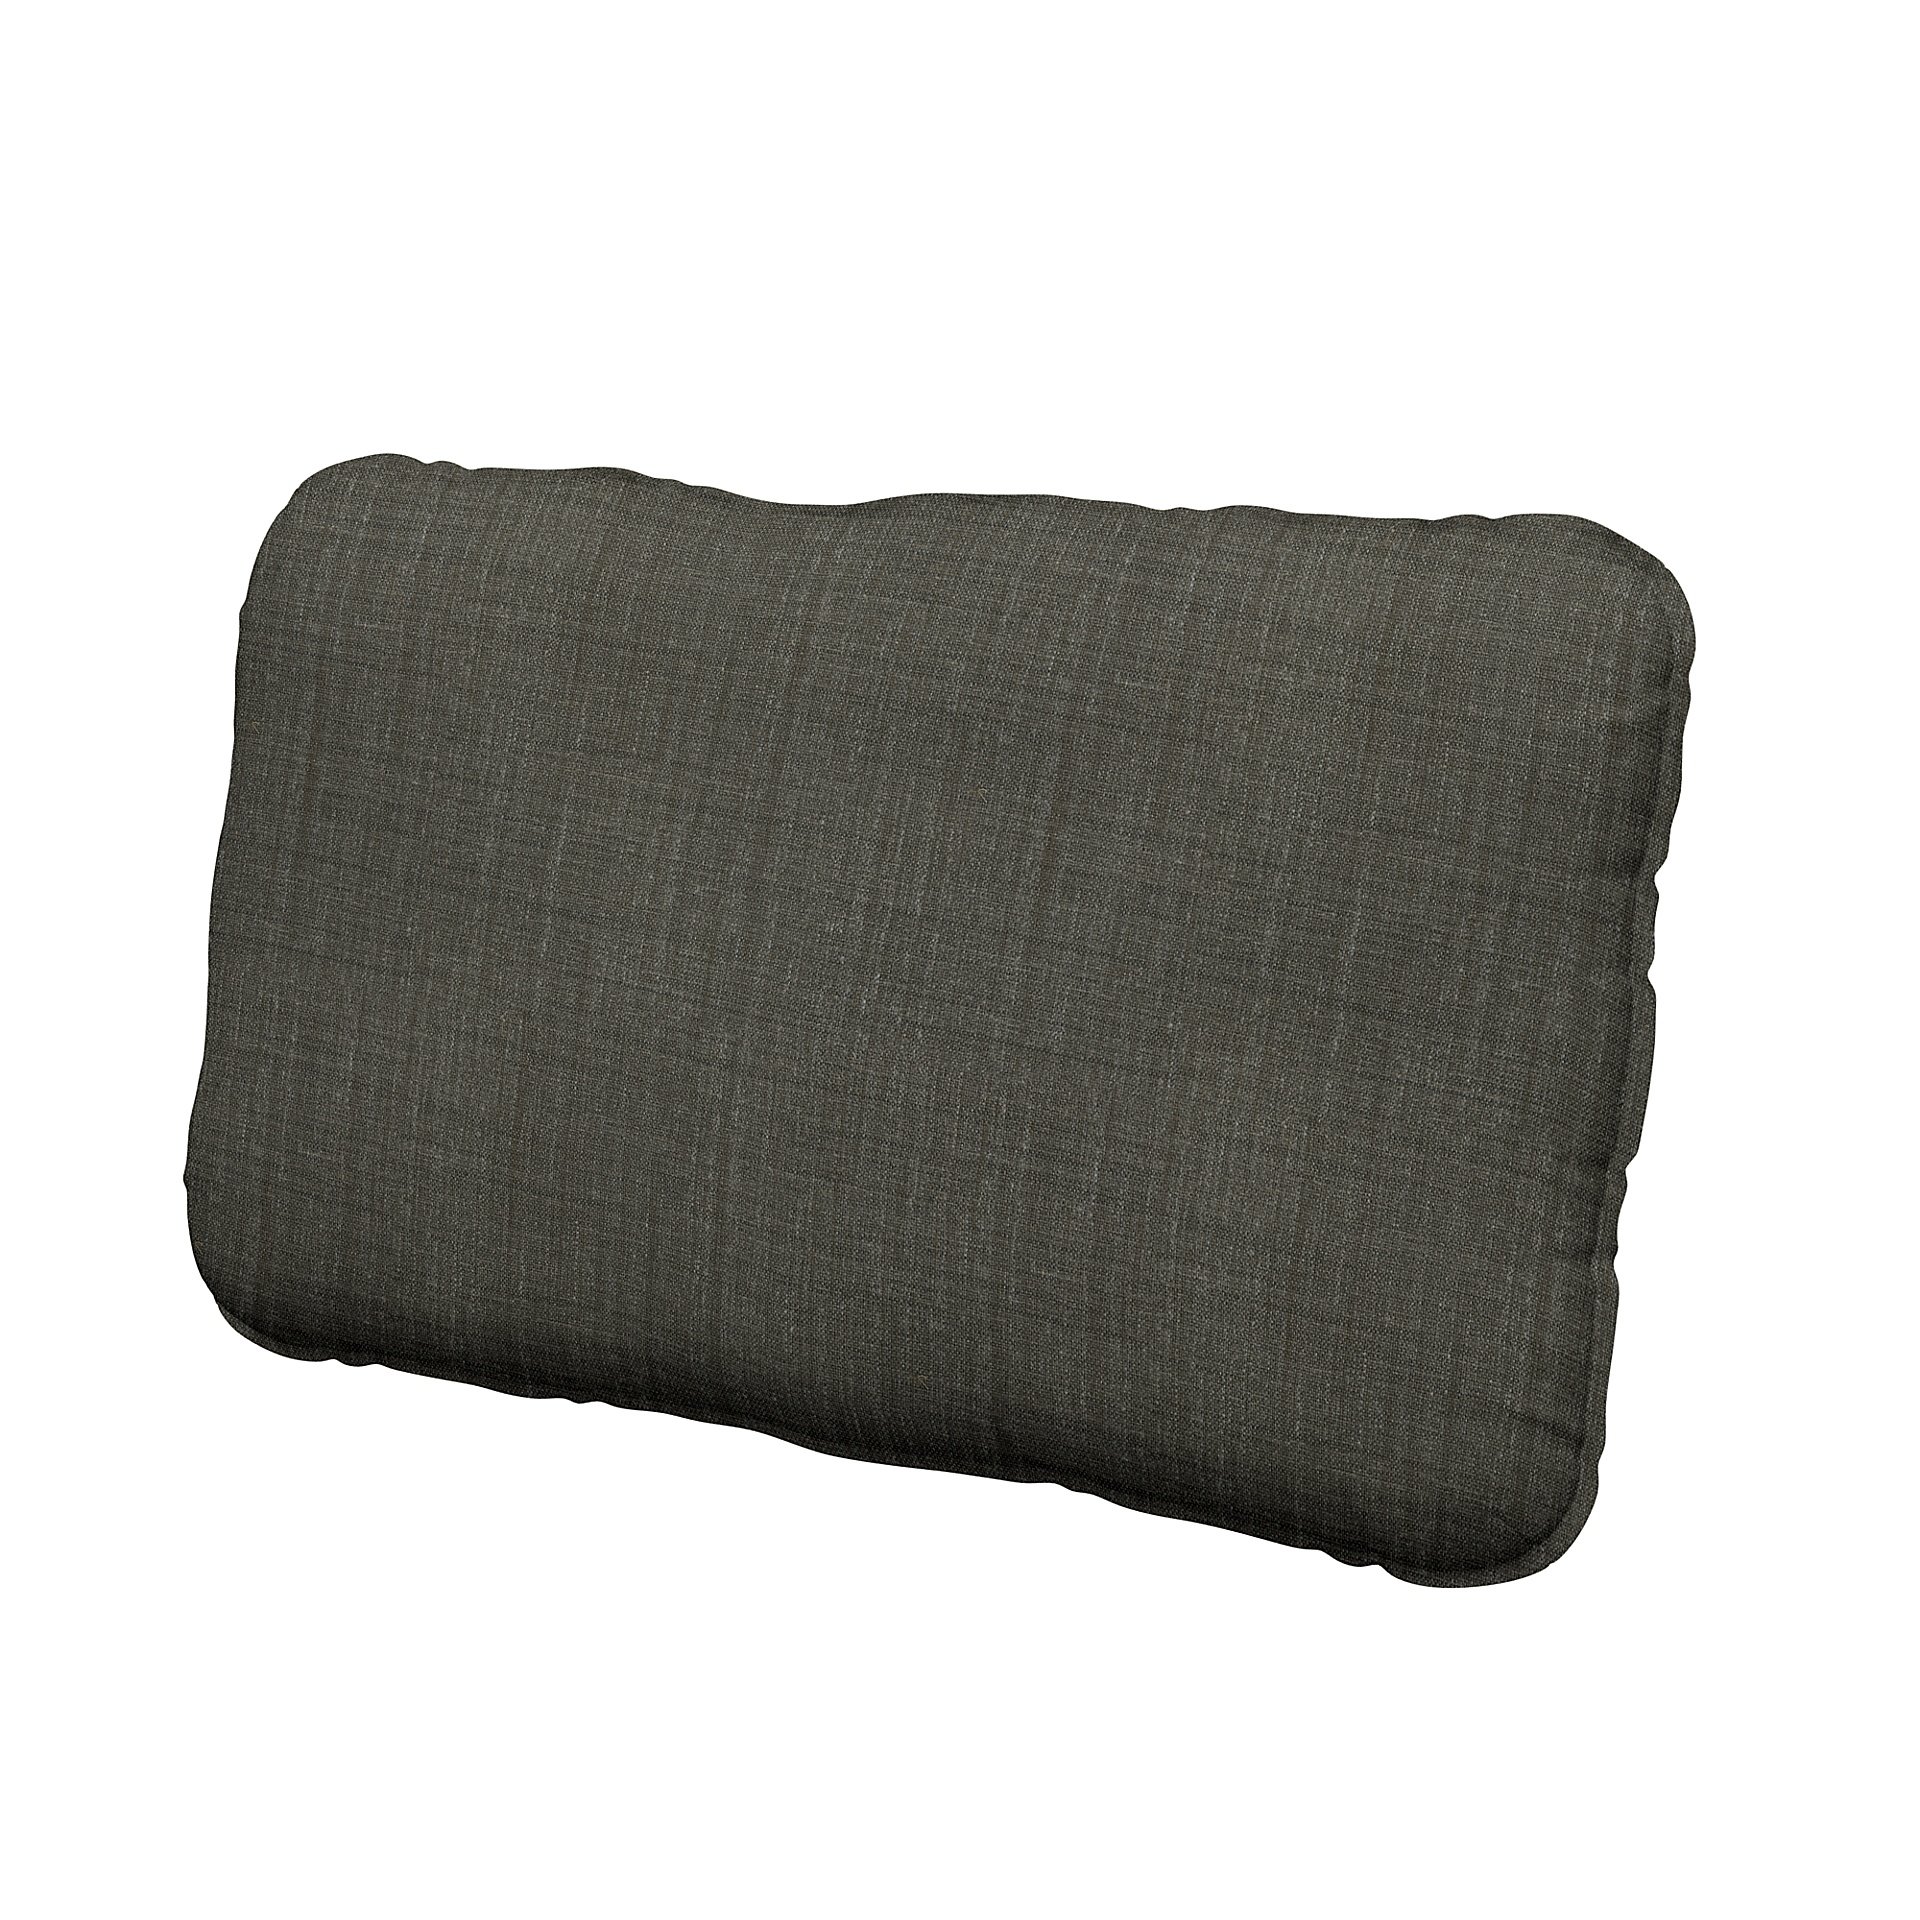 IKEA - Vallentuna back cushion cover 40x75cm, Mole Brown, Boucle & Texture - Bemz